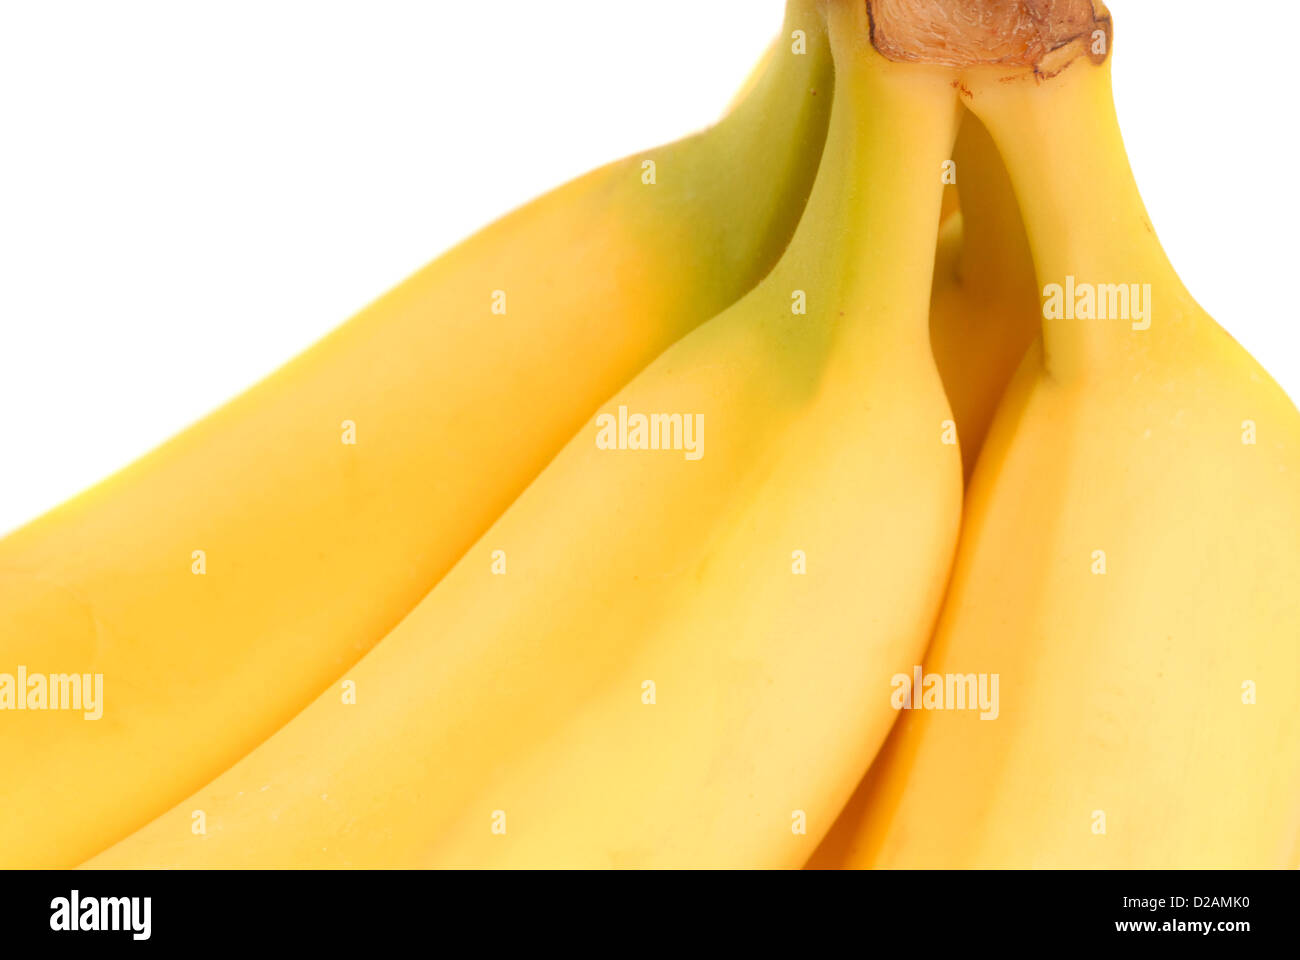 Mazzetto di fresche e mature banane gialle Foto Stock